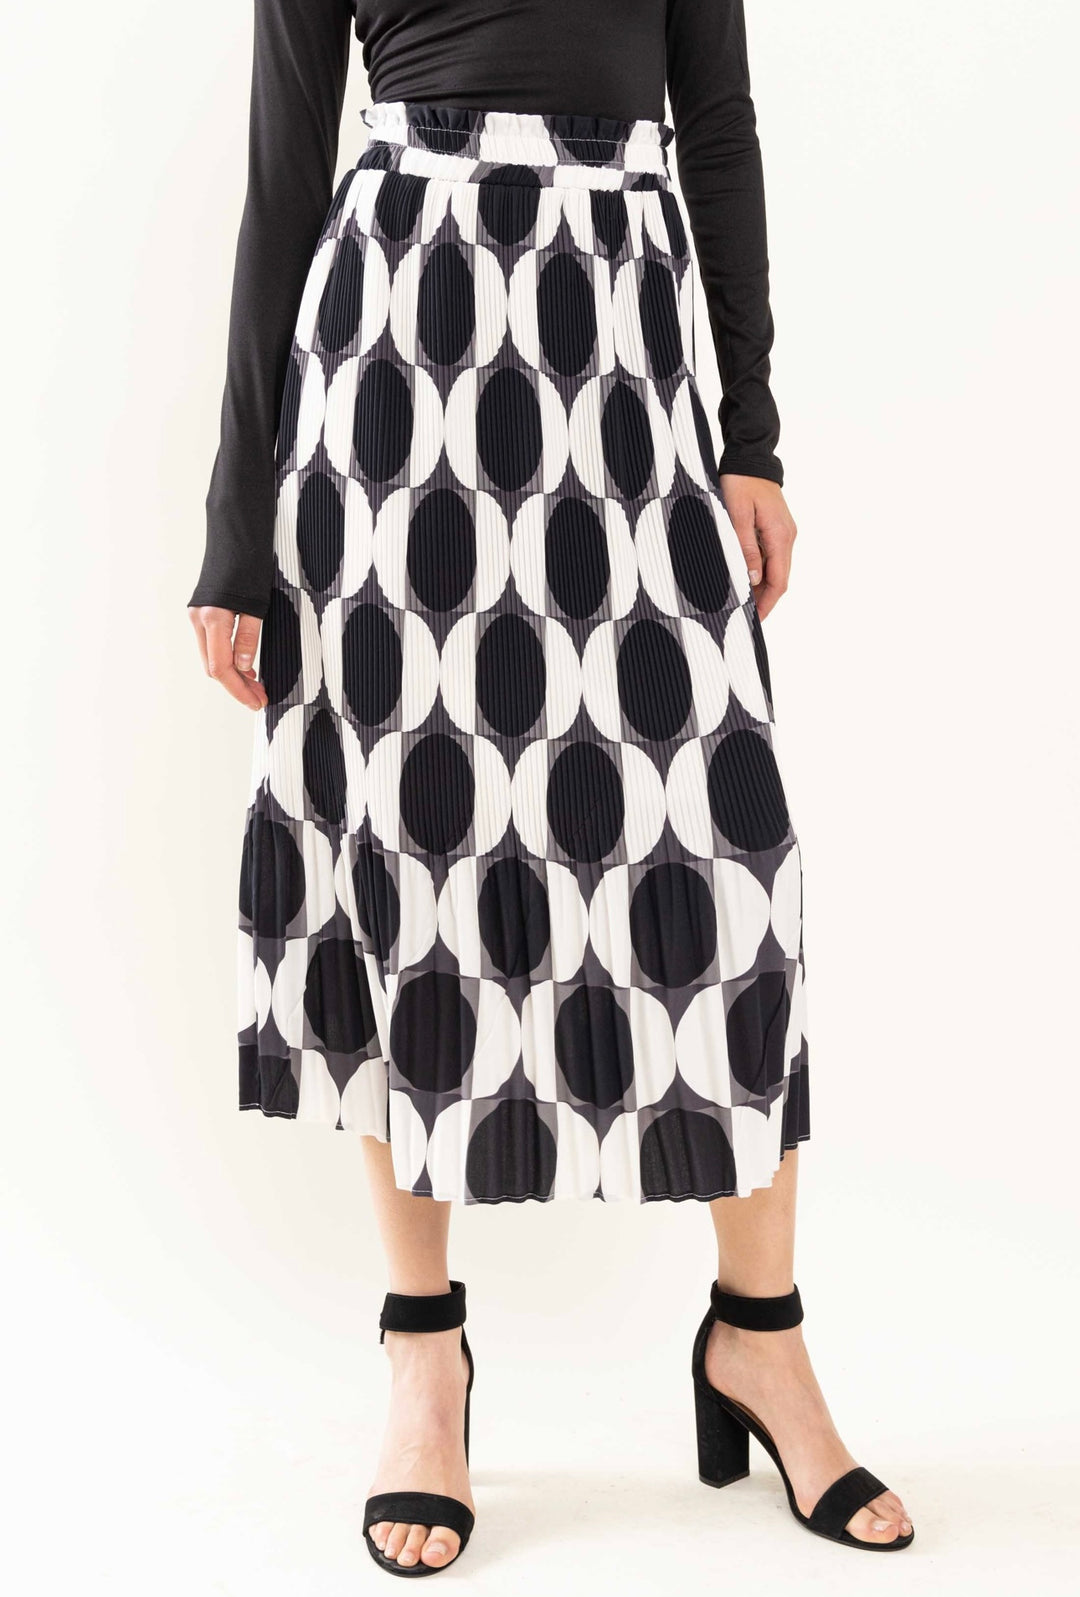 Liza Lou's Black Geometric Pleated Long Midi Skirt